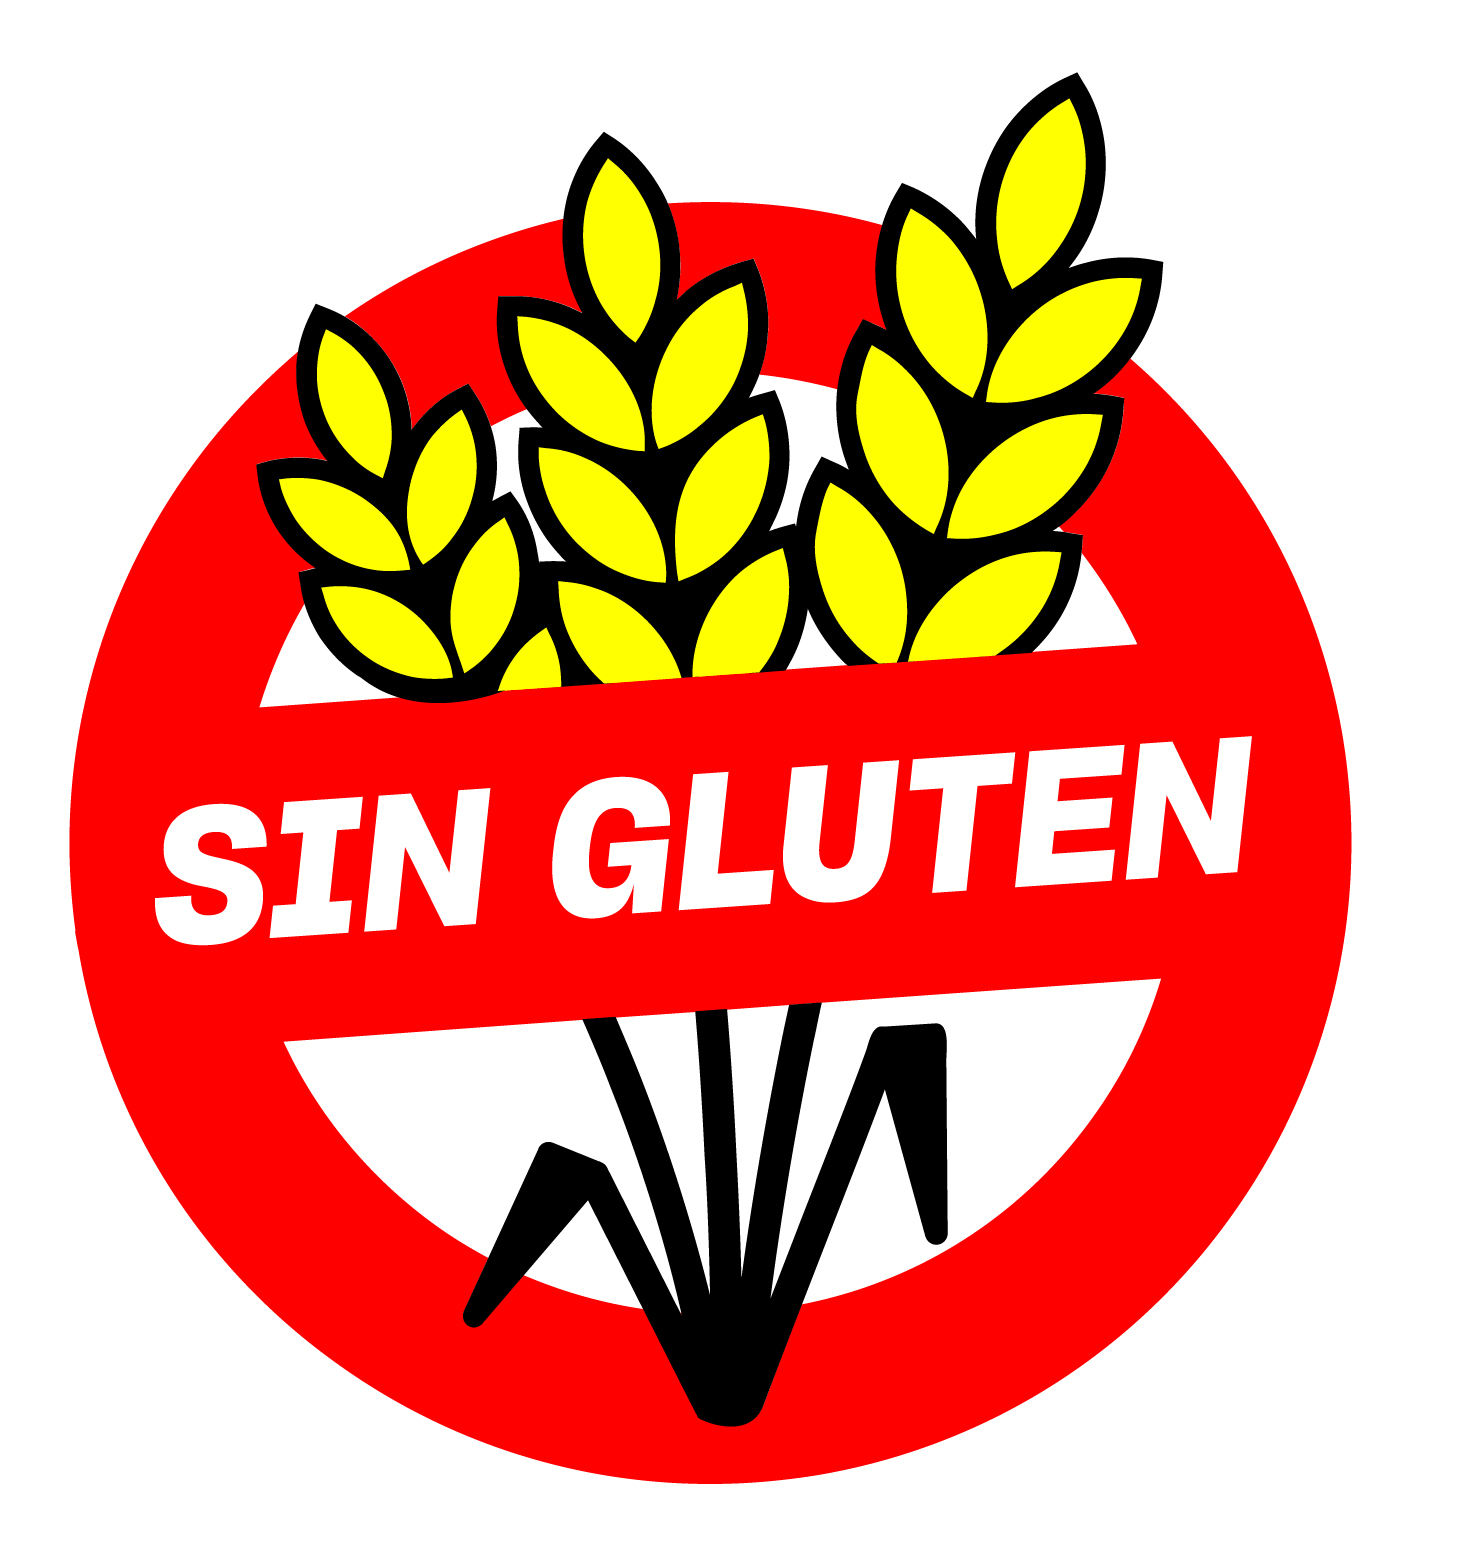 https://www.argentina.gob.ar/sites/default/files/sin_gluten_legal-01.jpg